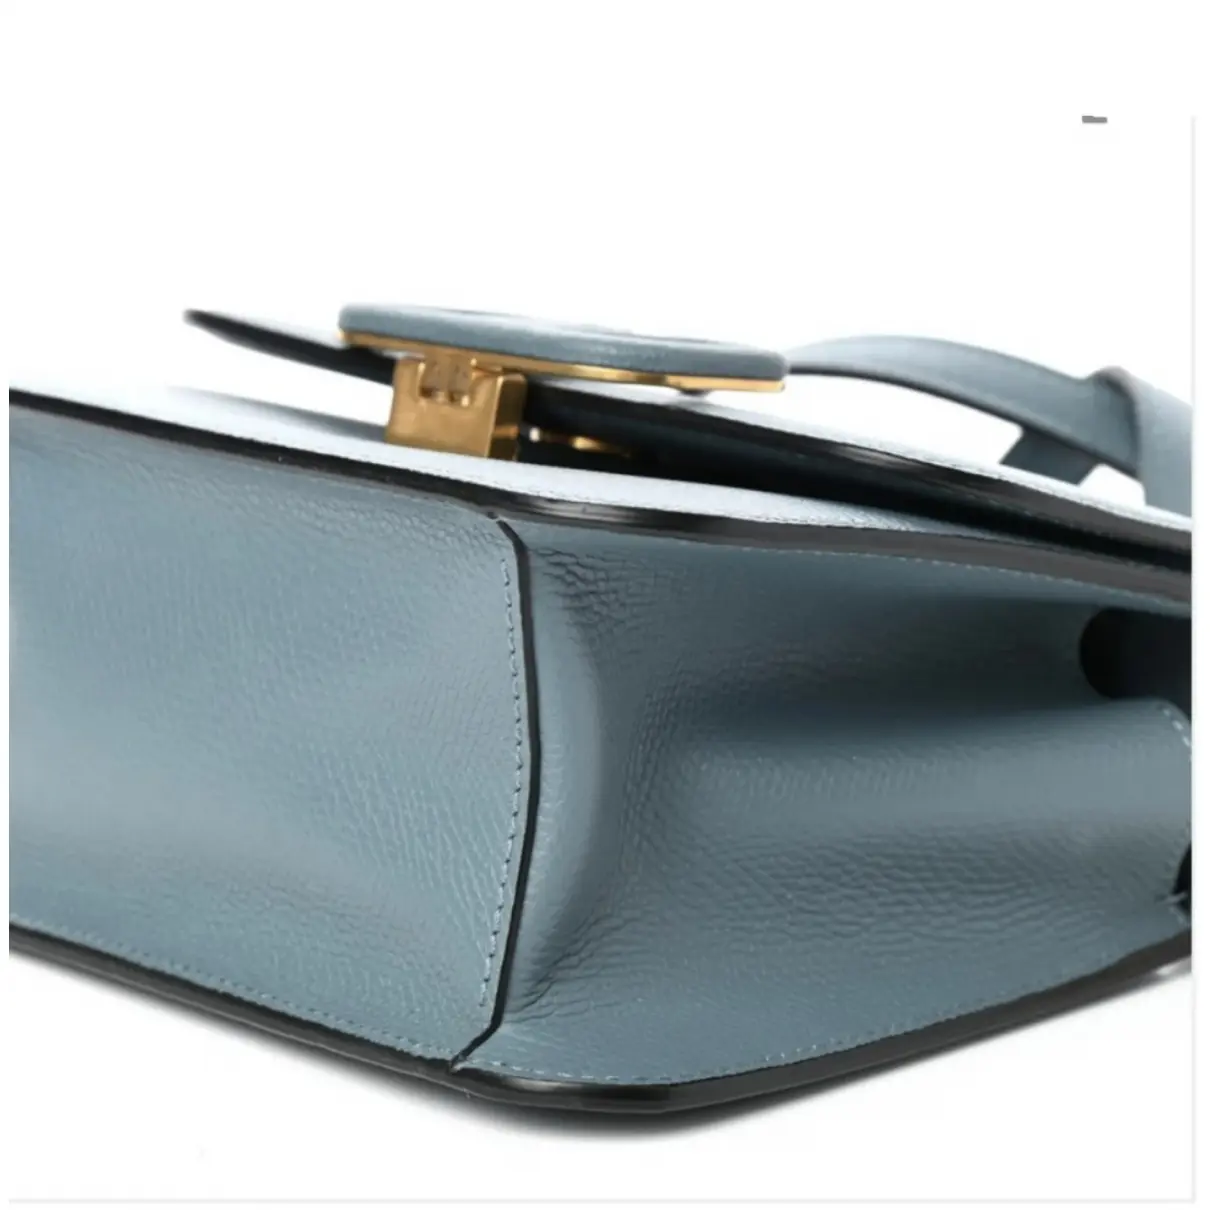 Luxury Valentino Garavani Handbags Women